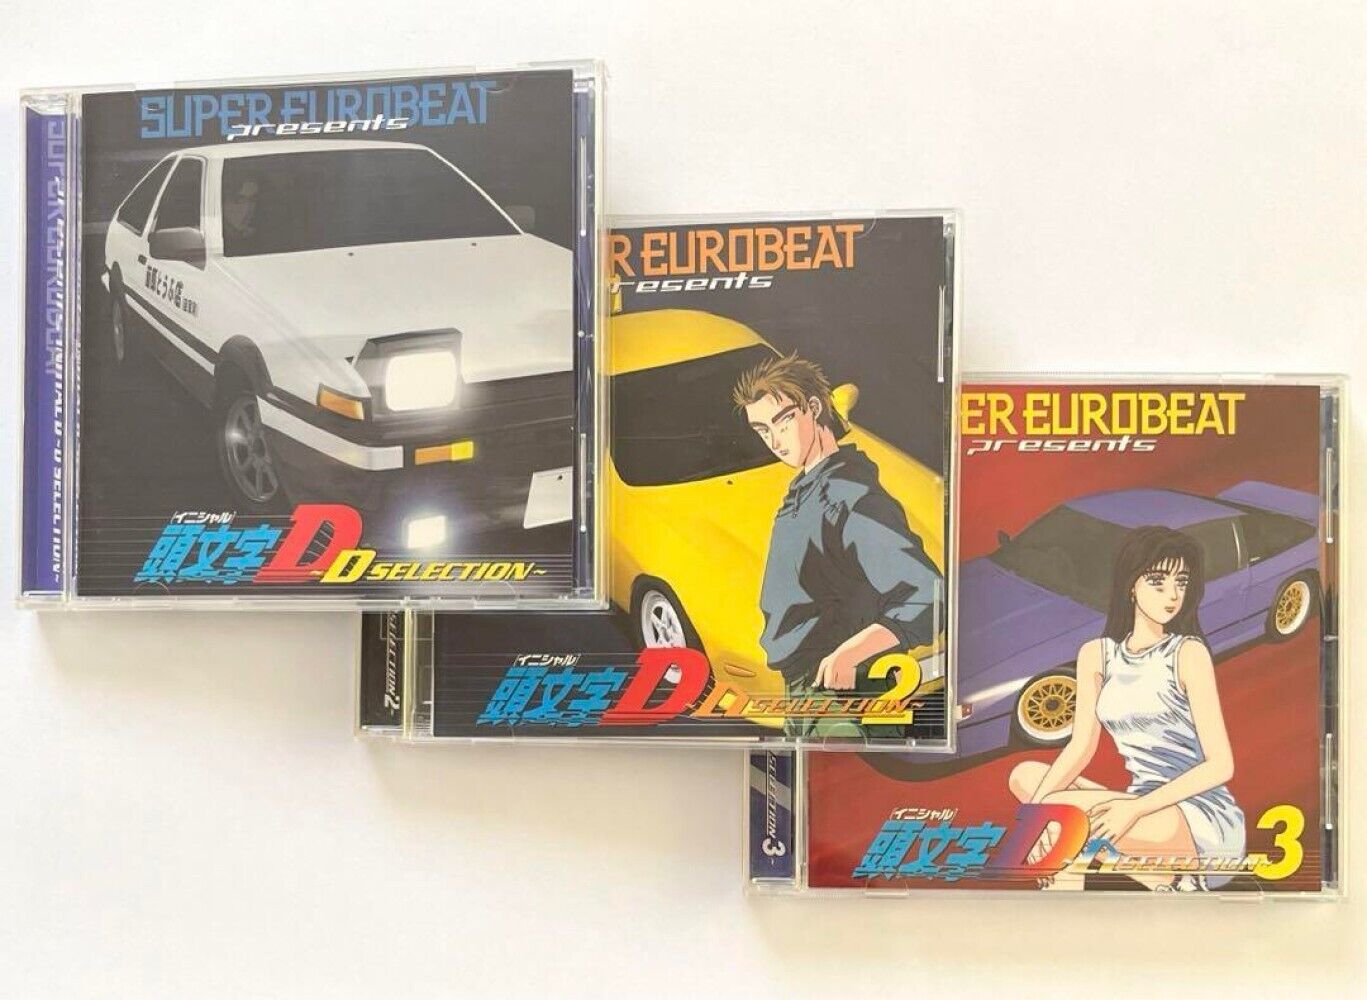 Super Eurobeat initial D Presents selection 3 CD D-Selection Set of 3